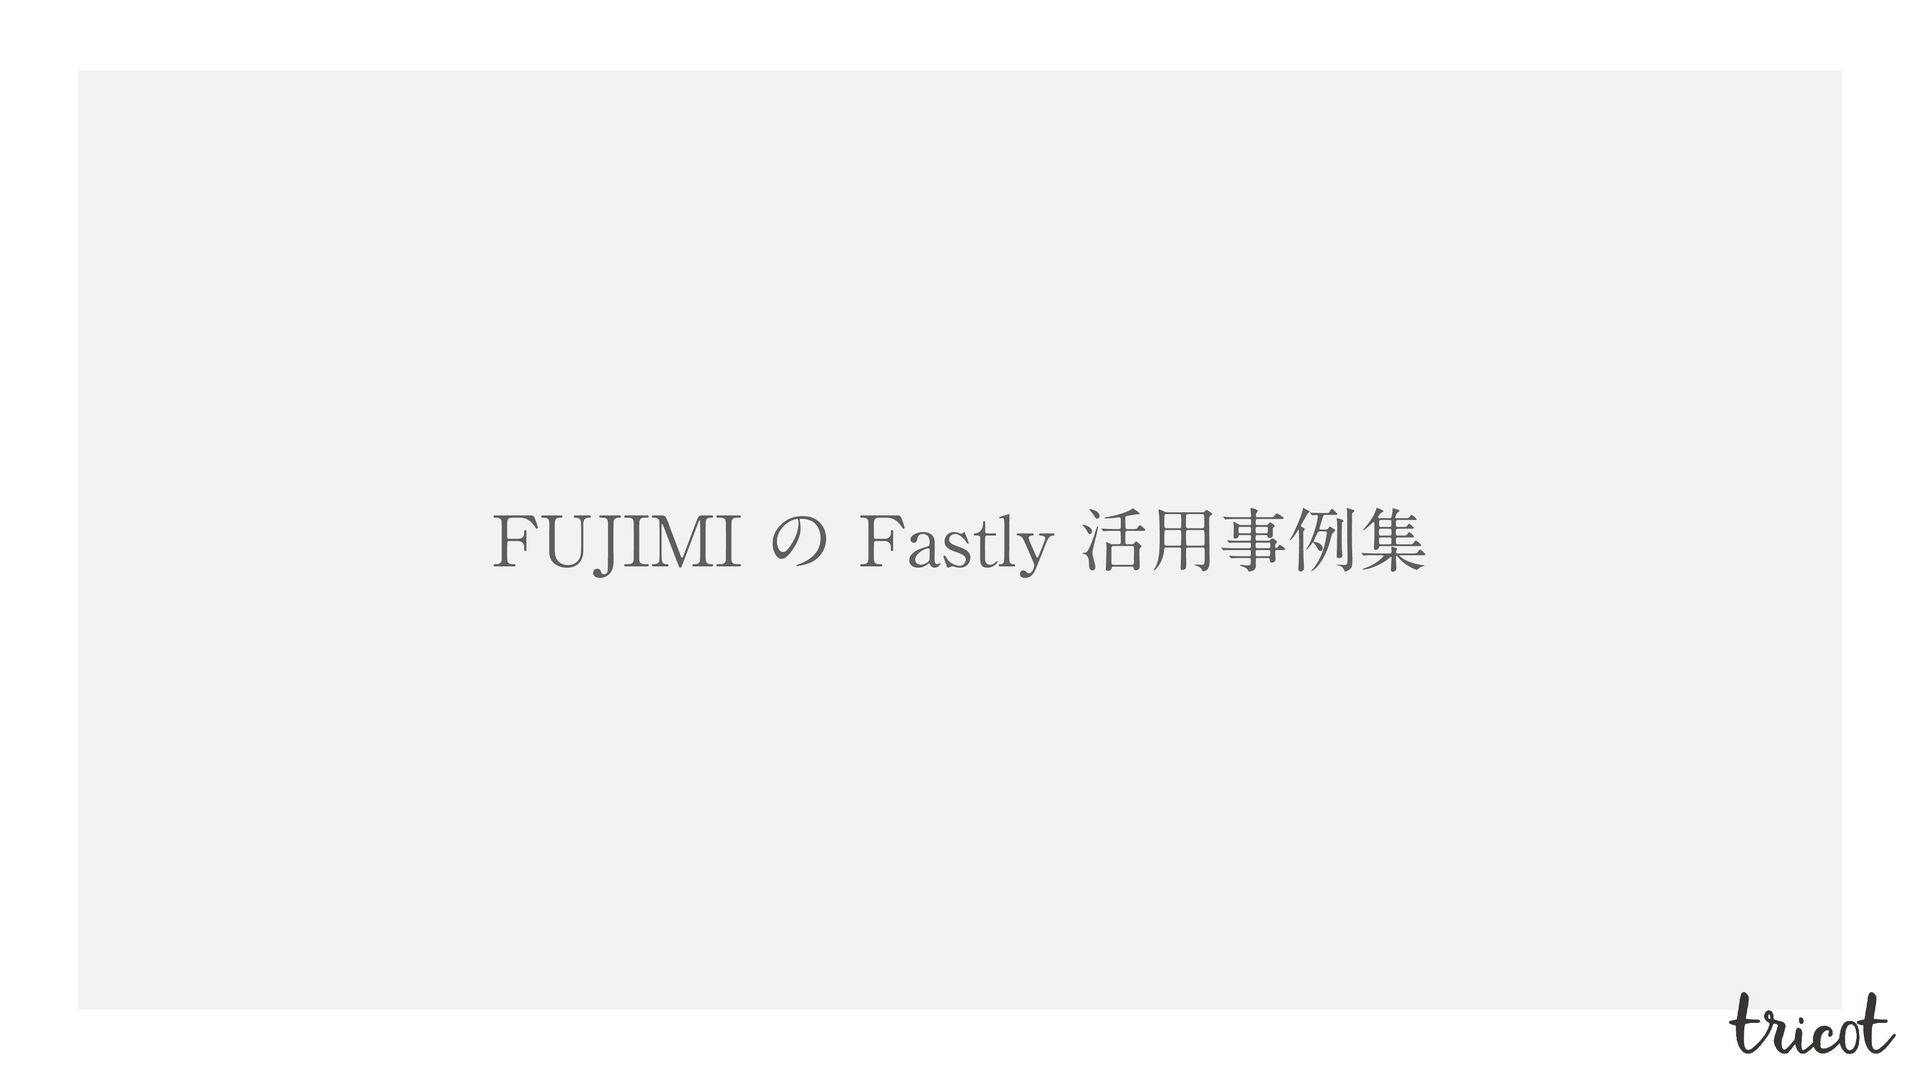 FUJIMI の Fastly 活用事例